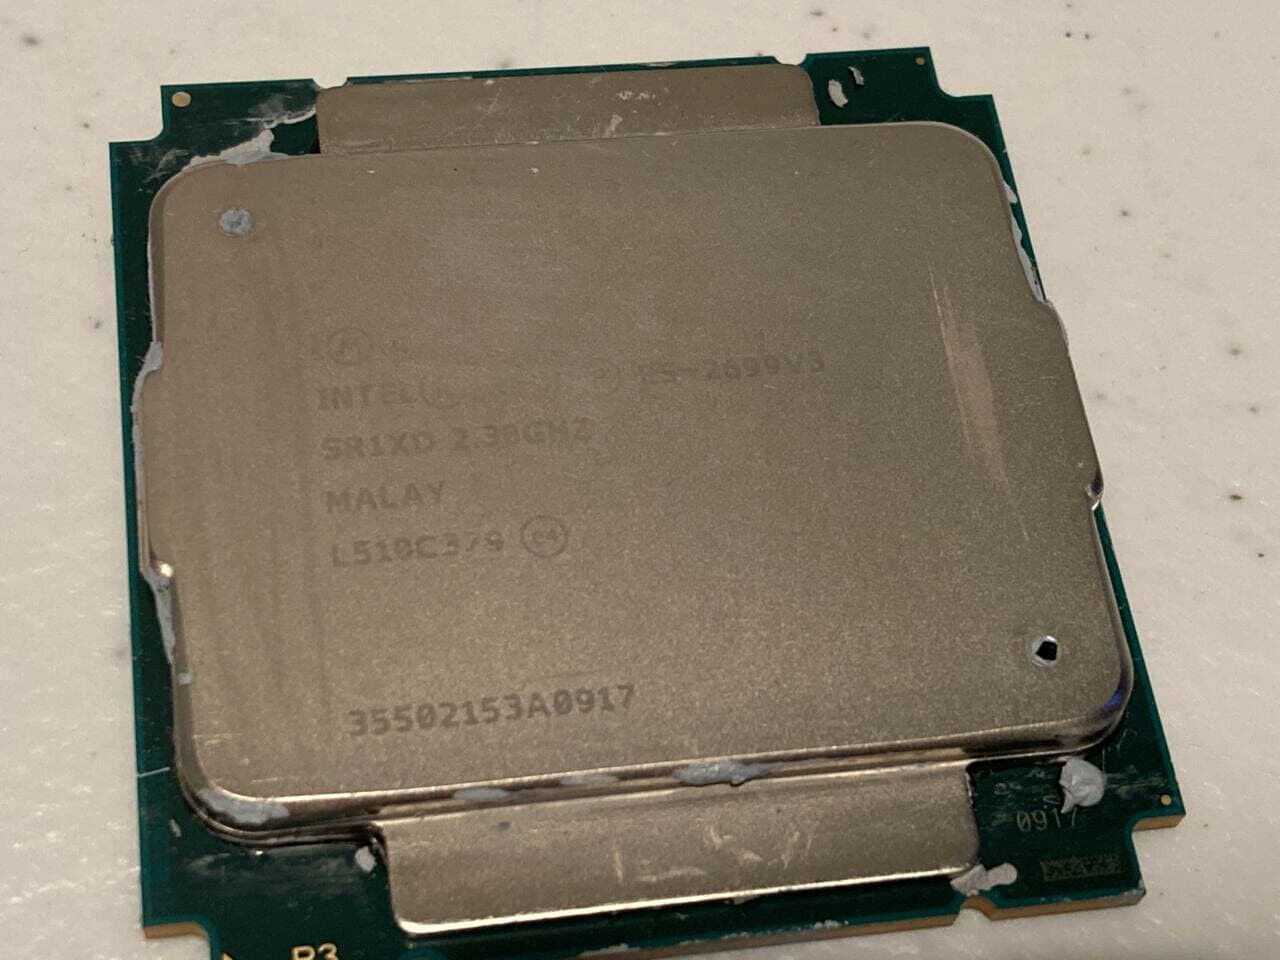 Intel Xeon E5-2699V3 2.3GHz Eighteen Core Processor